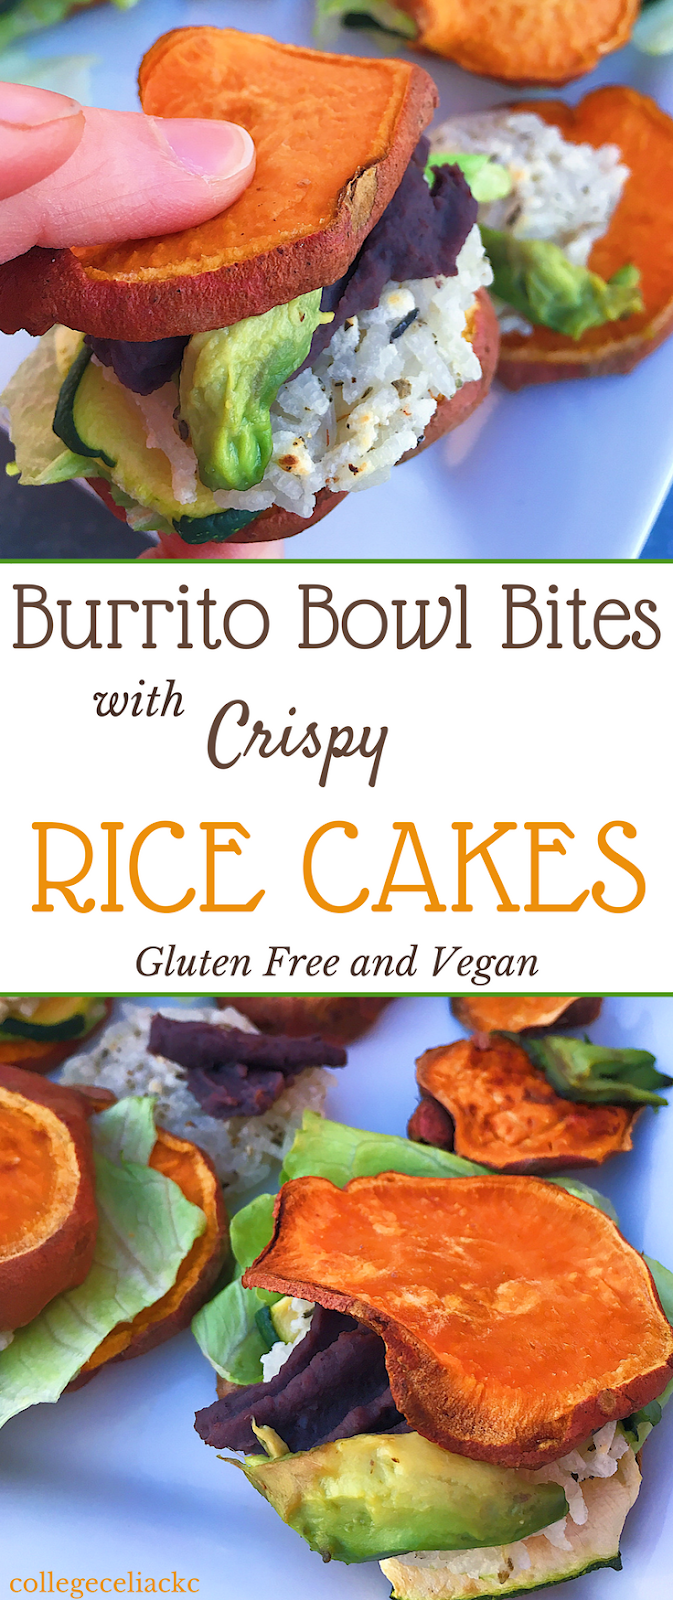 Burrito Bowl Bites with Crispy Rice Cakes (Gluten Free, Vegan)